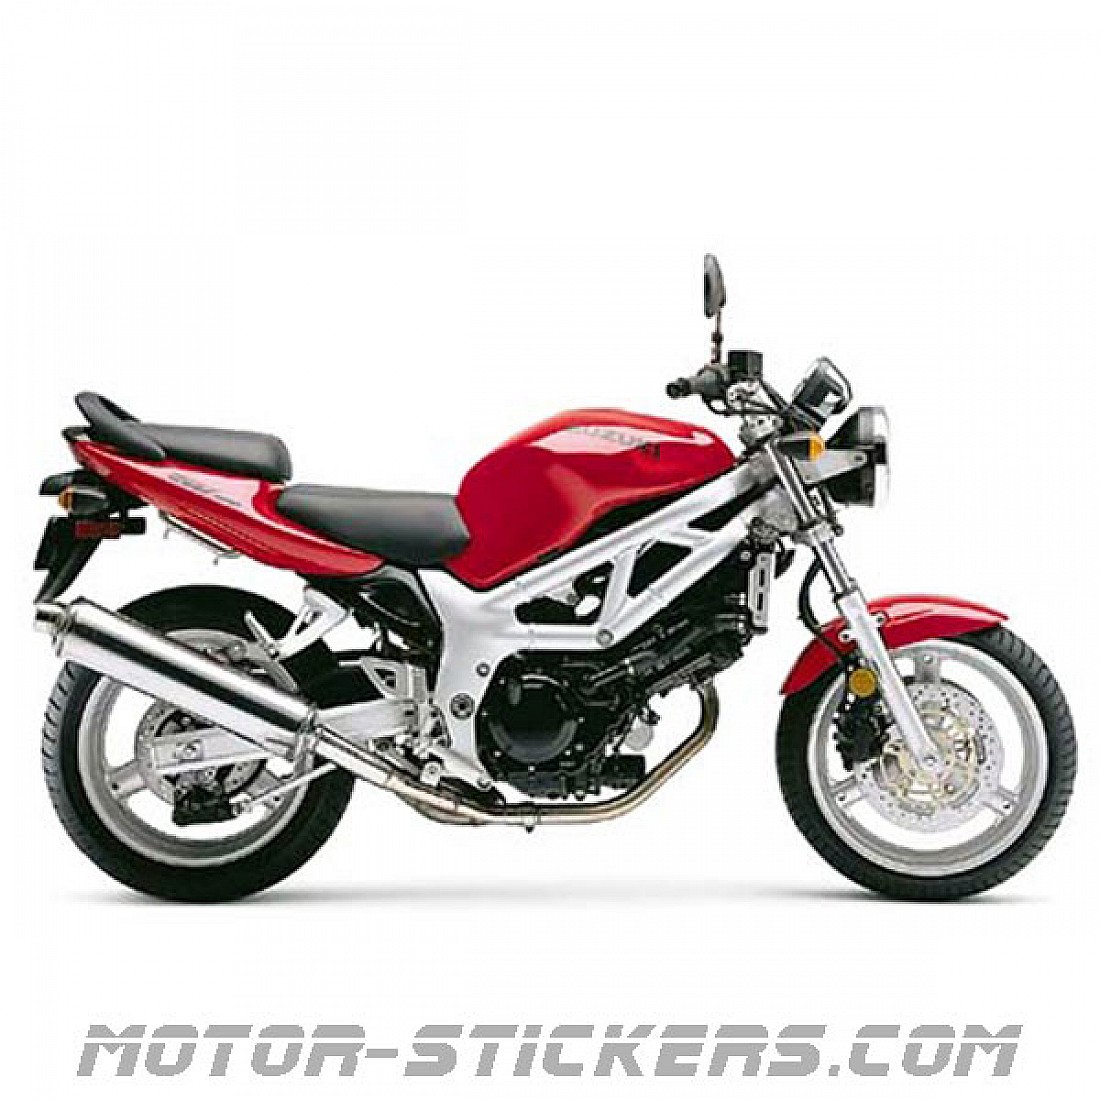 Suzuki SV 650 '992002 naklejki Naklejki na motocykle